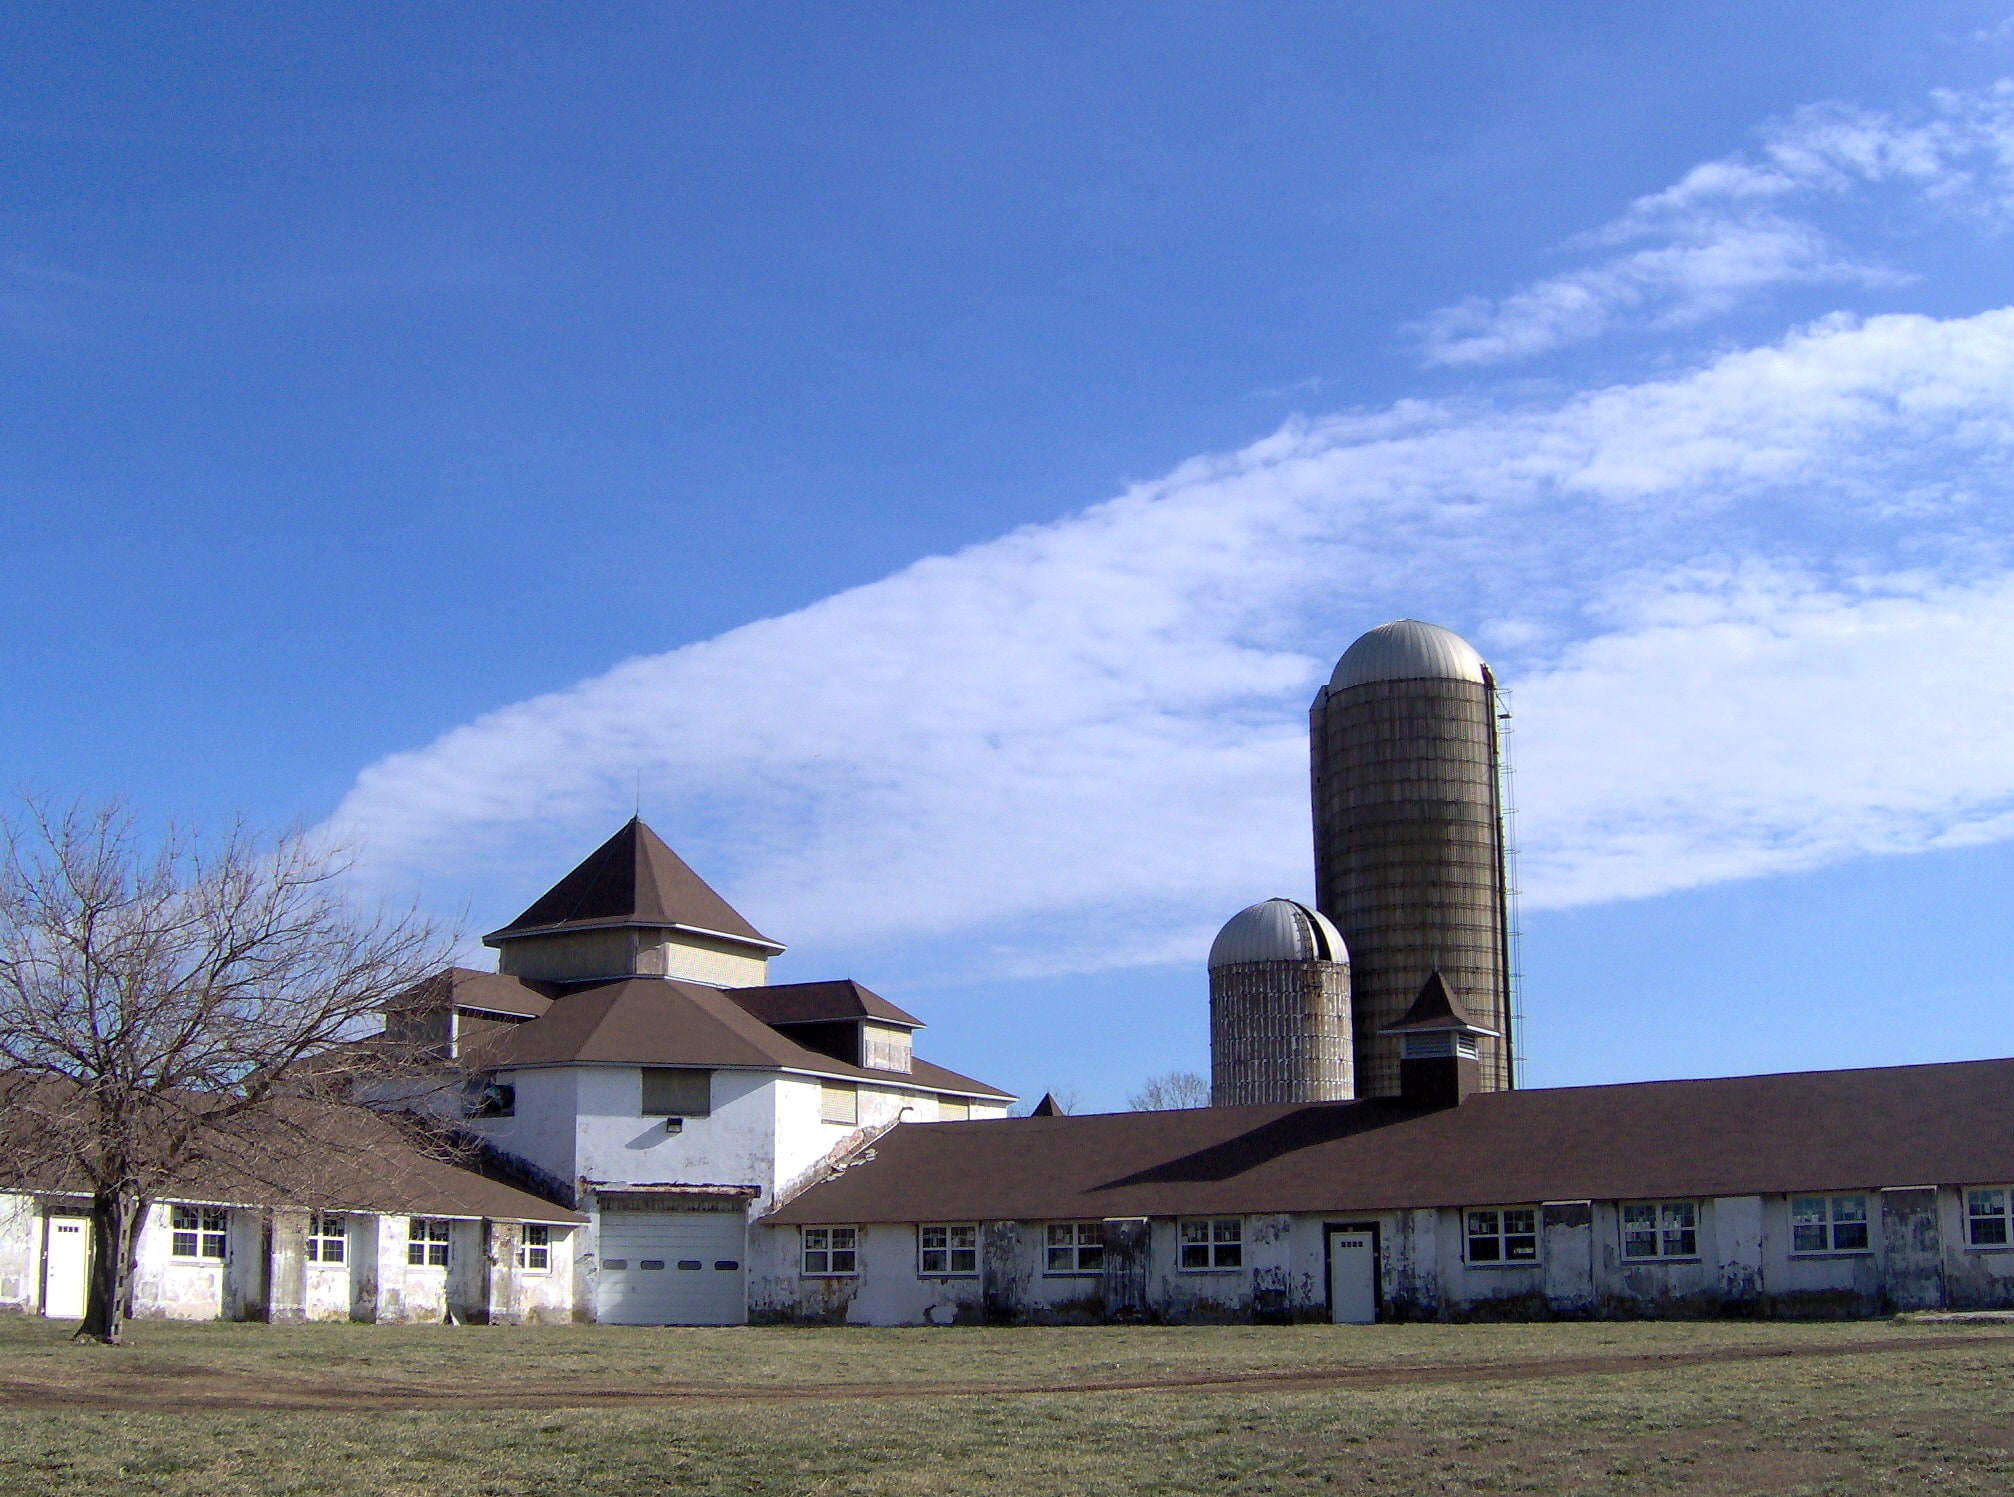 Norristown Farm Park, United States